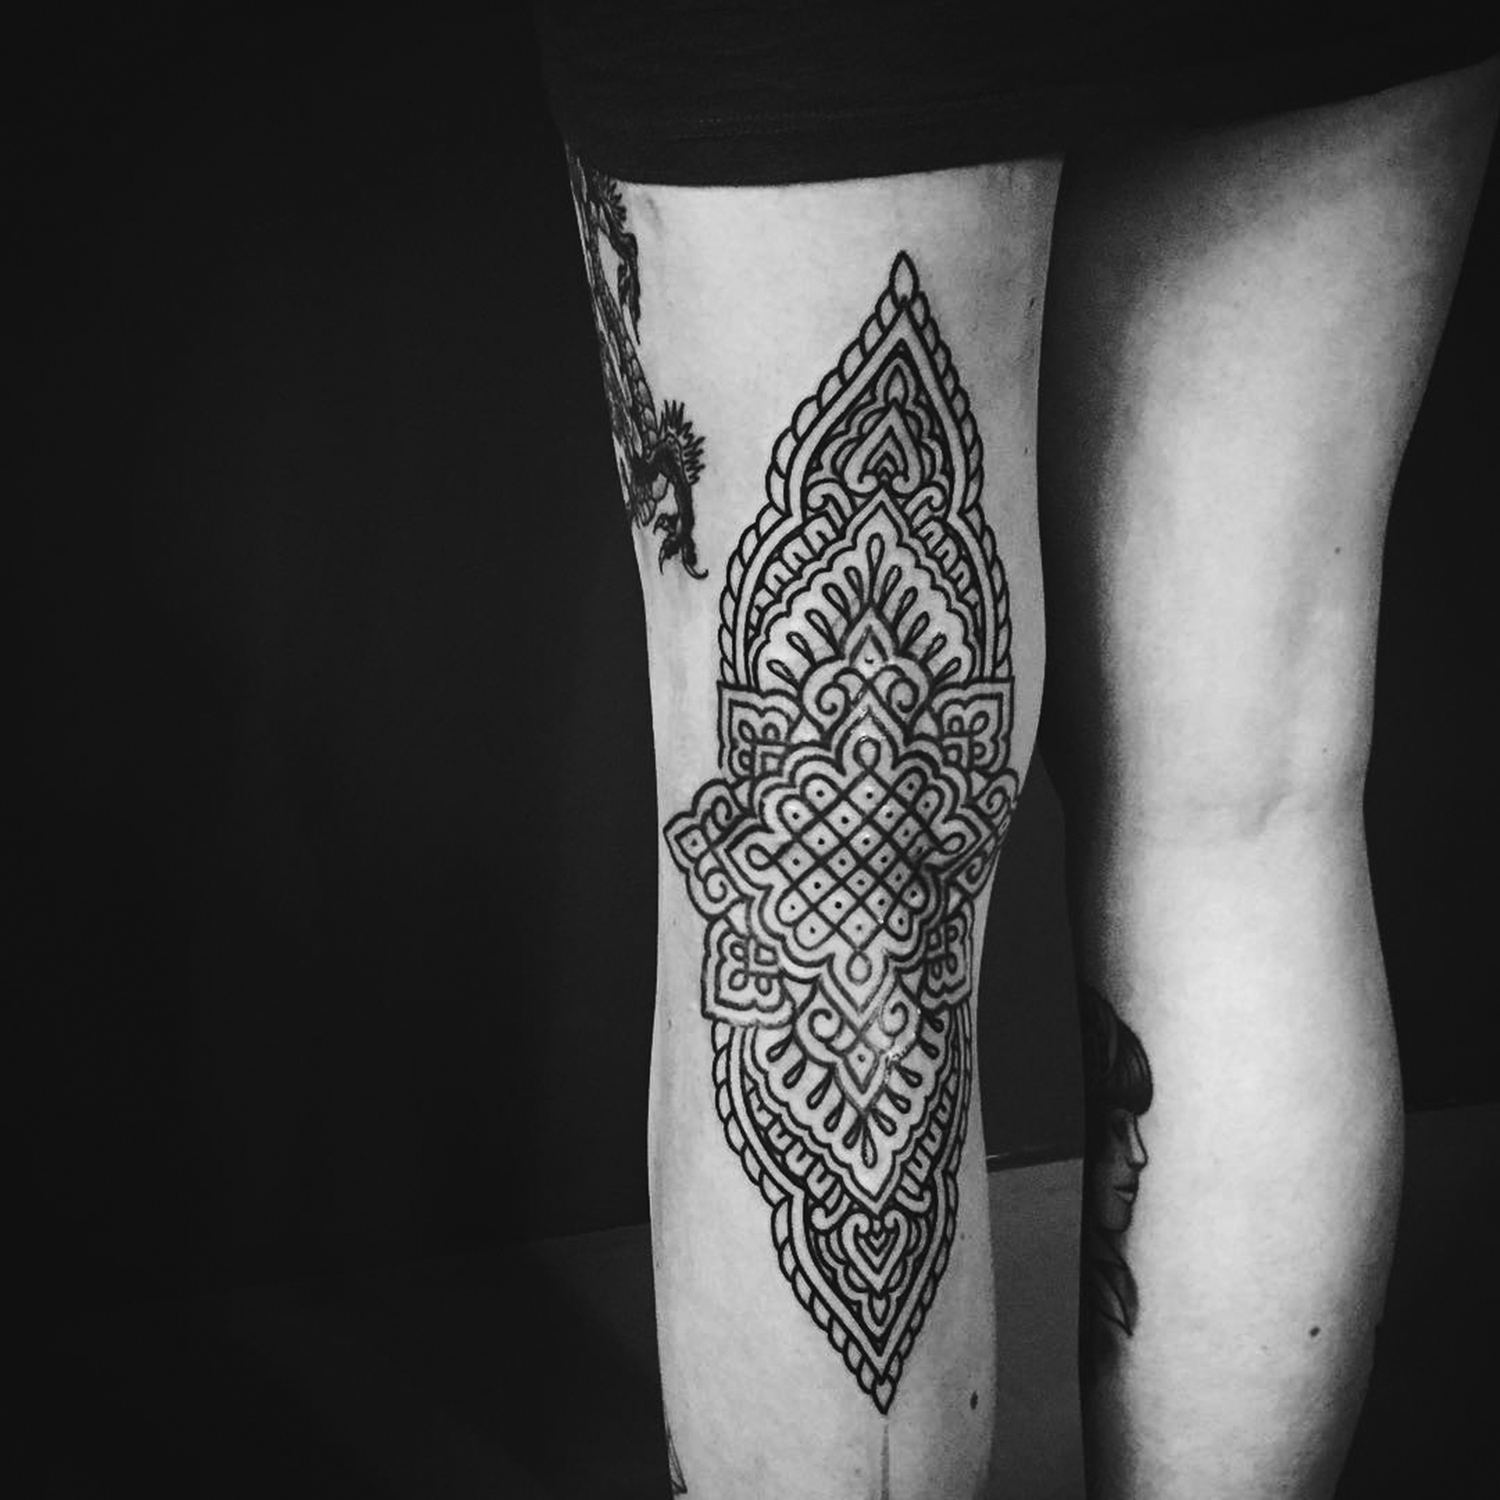 Ellemental Tattoos - back of knee tattoo